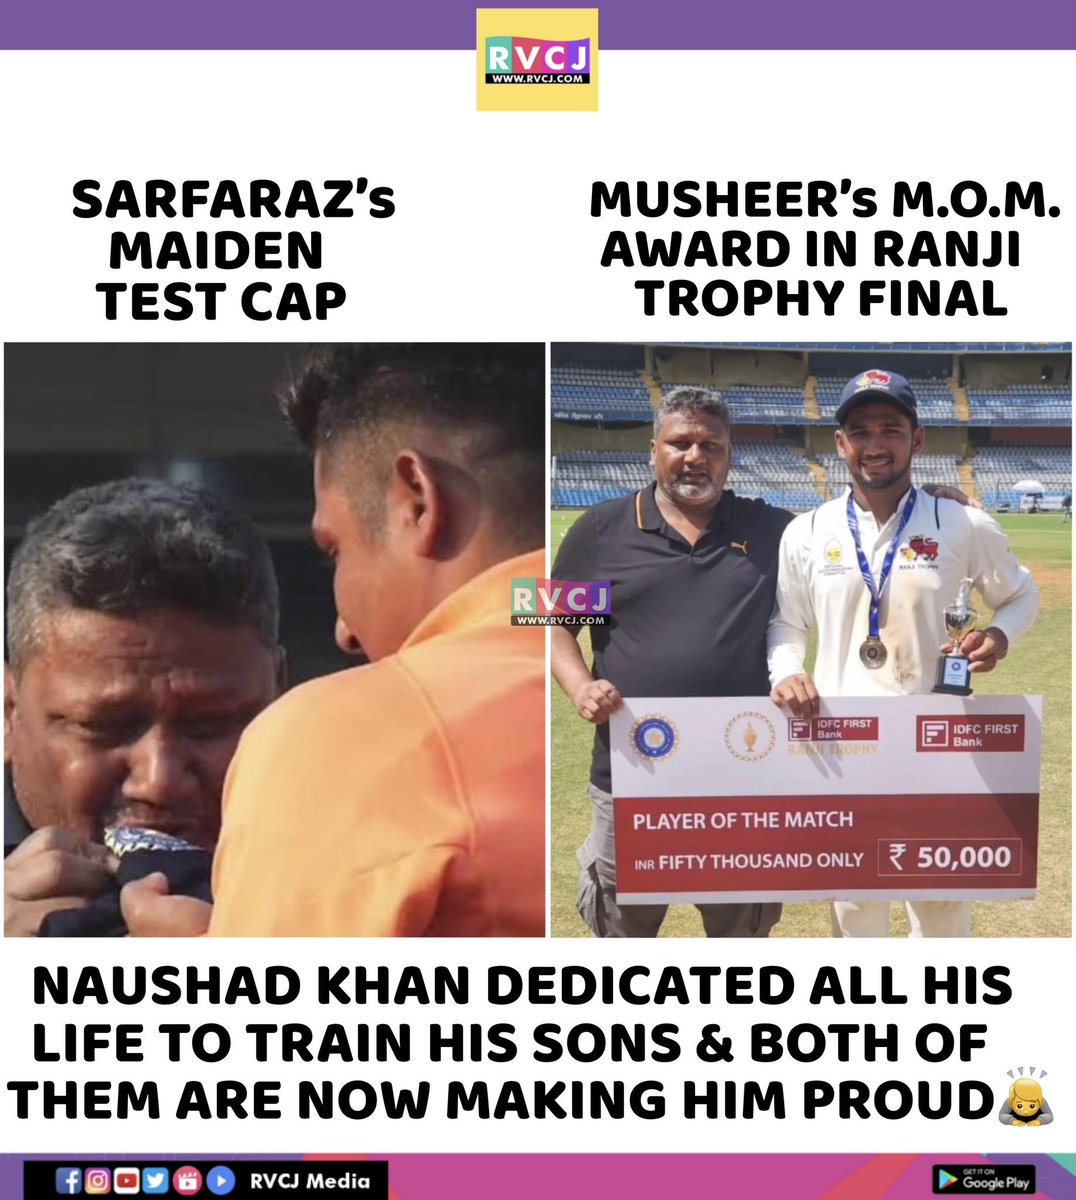 Proud moment
#naushadkhan #sarfarazkhan #musheerkhan #ranji #trophy